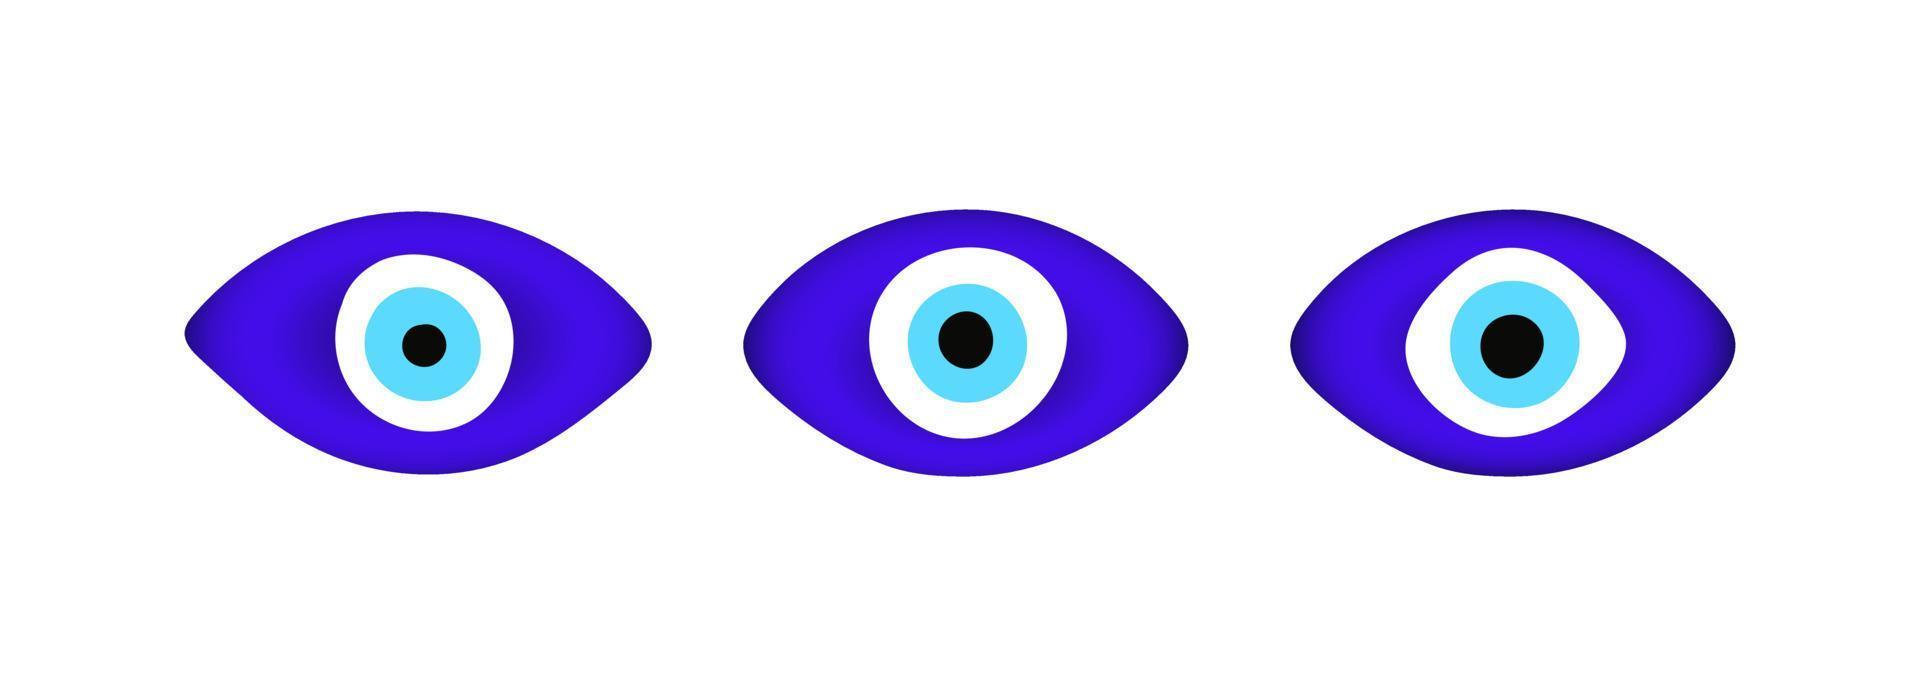 azul oriental mau olhado símbolo amuleto estilo plano design ilustração vetorial isolado no fundo branco. vetor